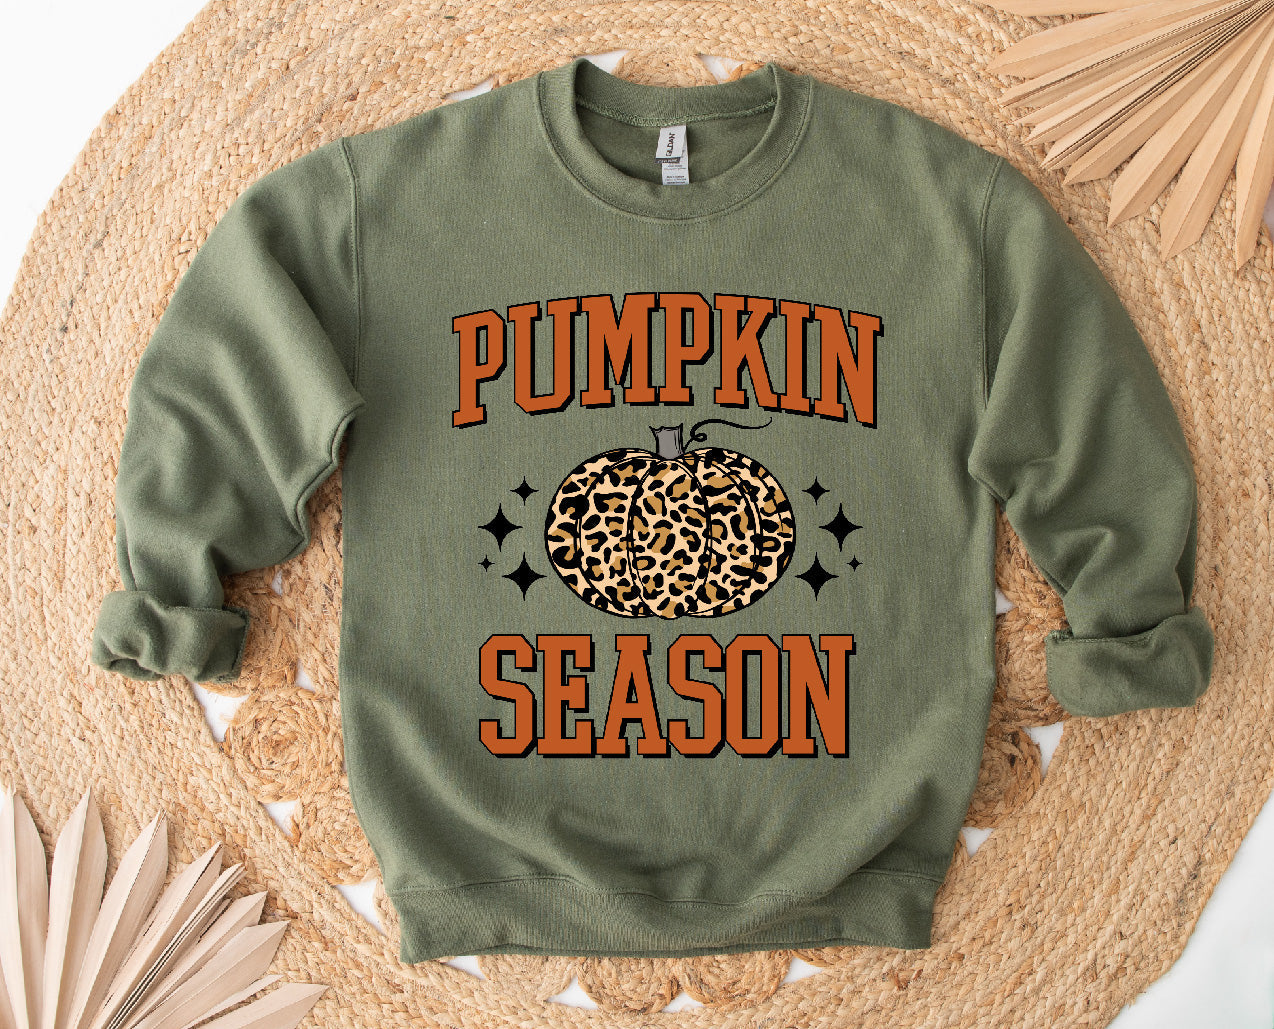 Pumpkin Season on a Military Green Sweatshirt